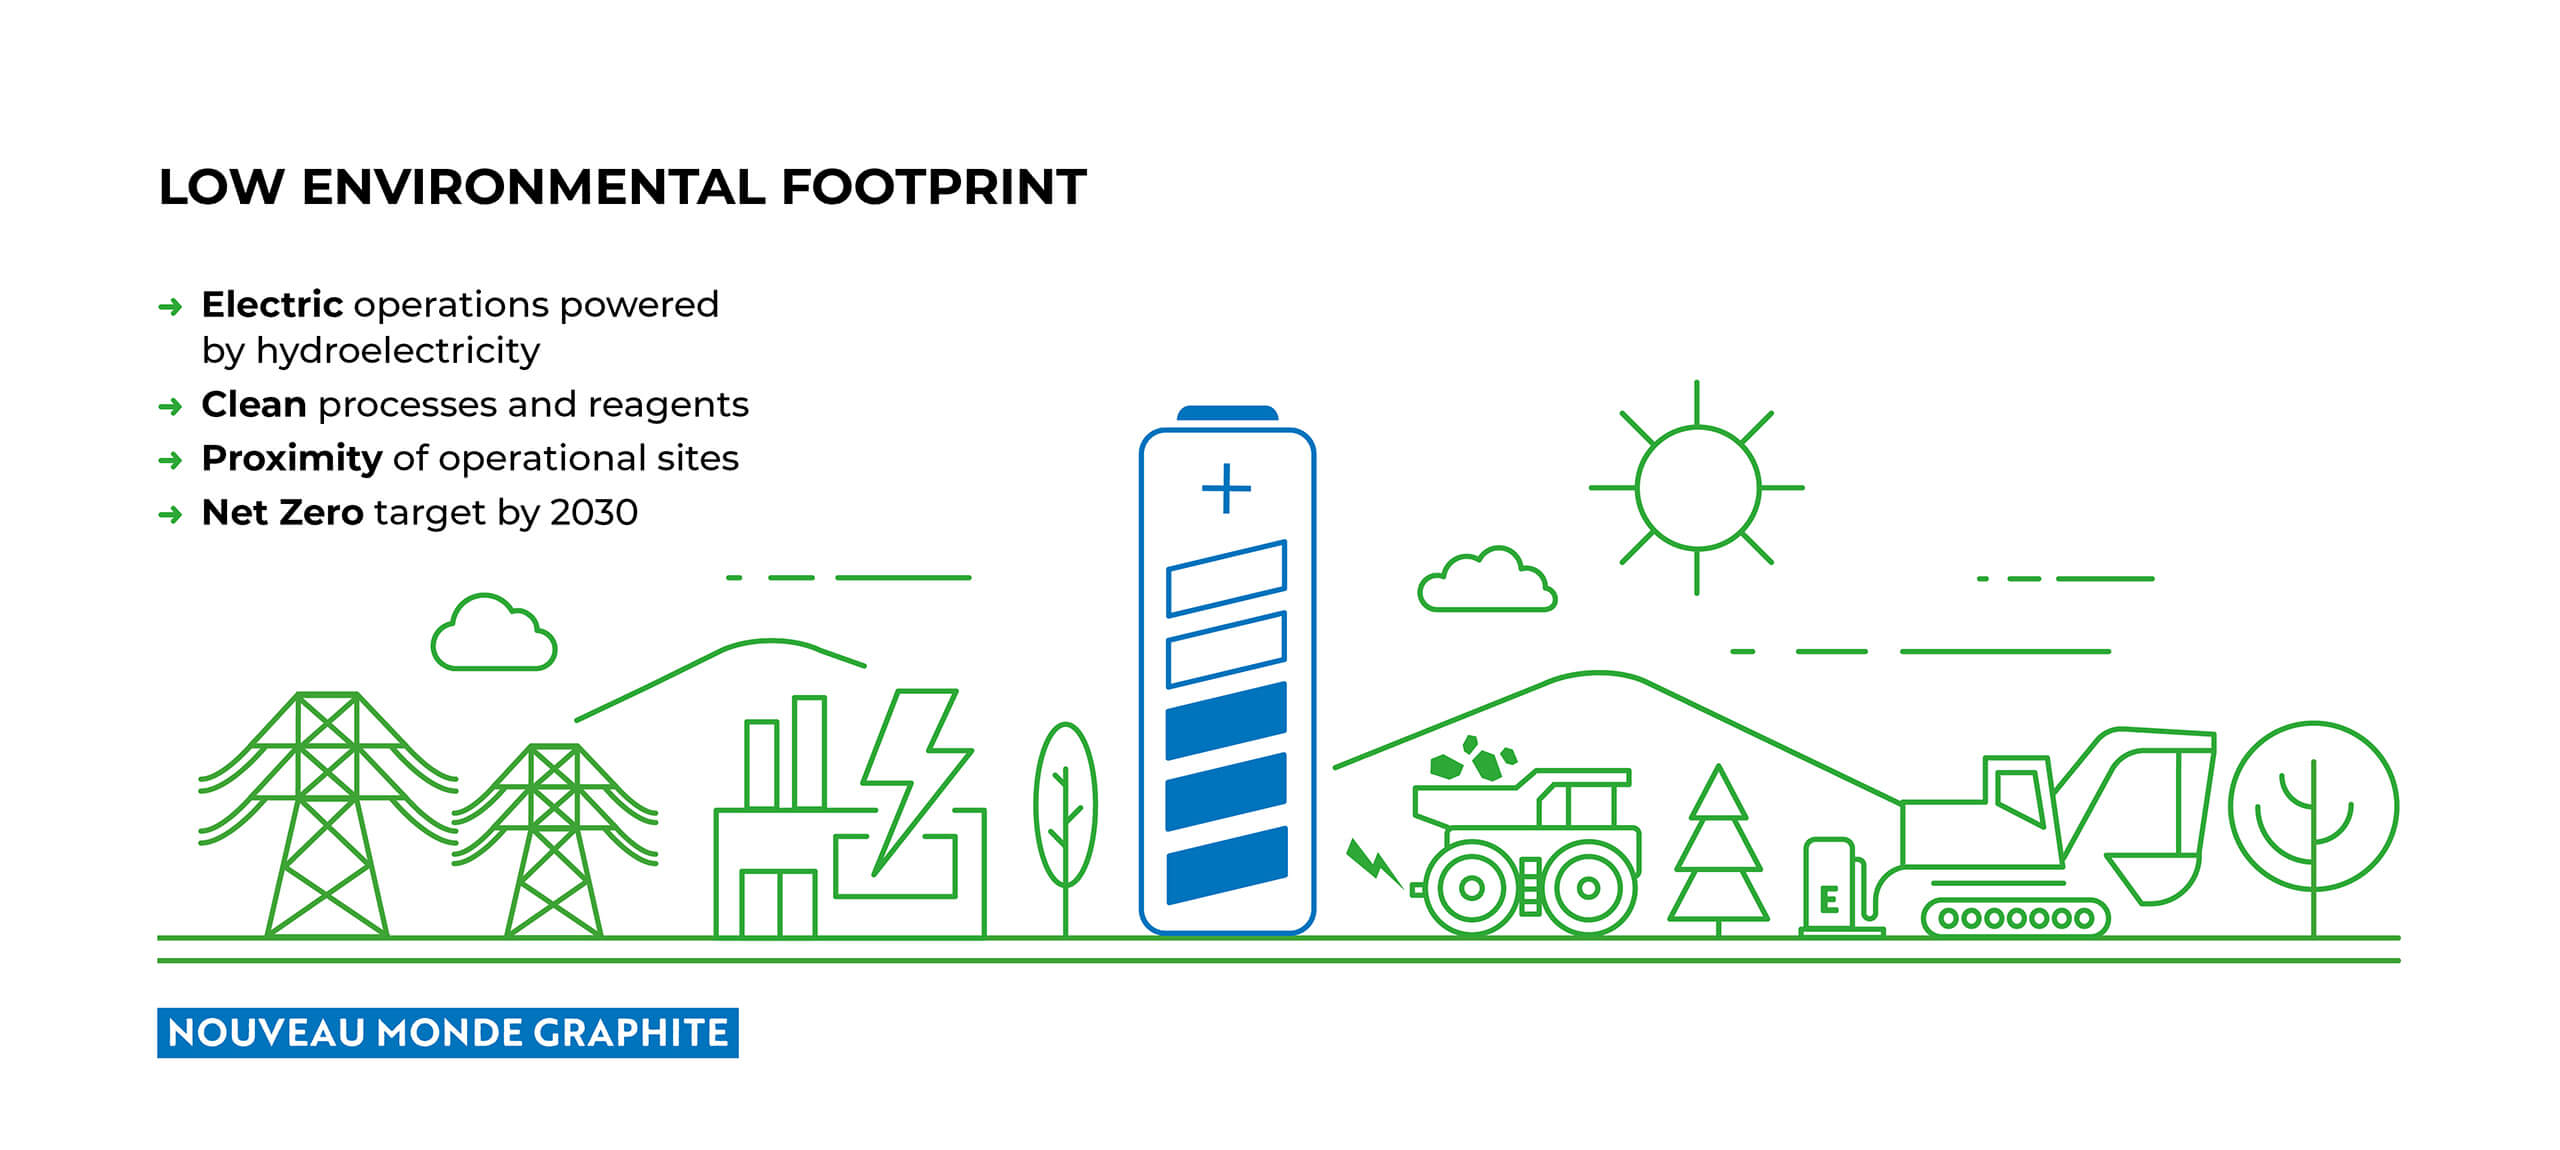 NMG - Low environmental footprint